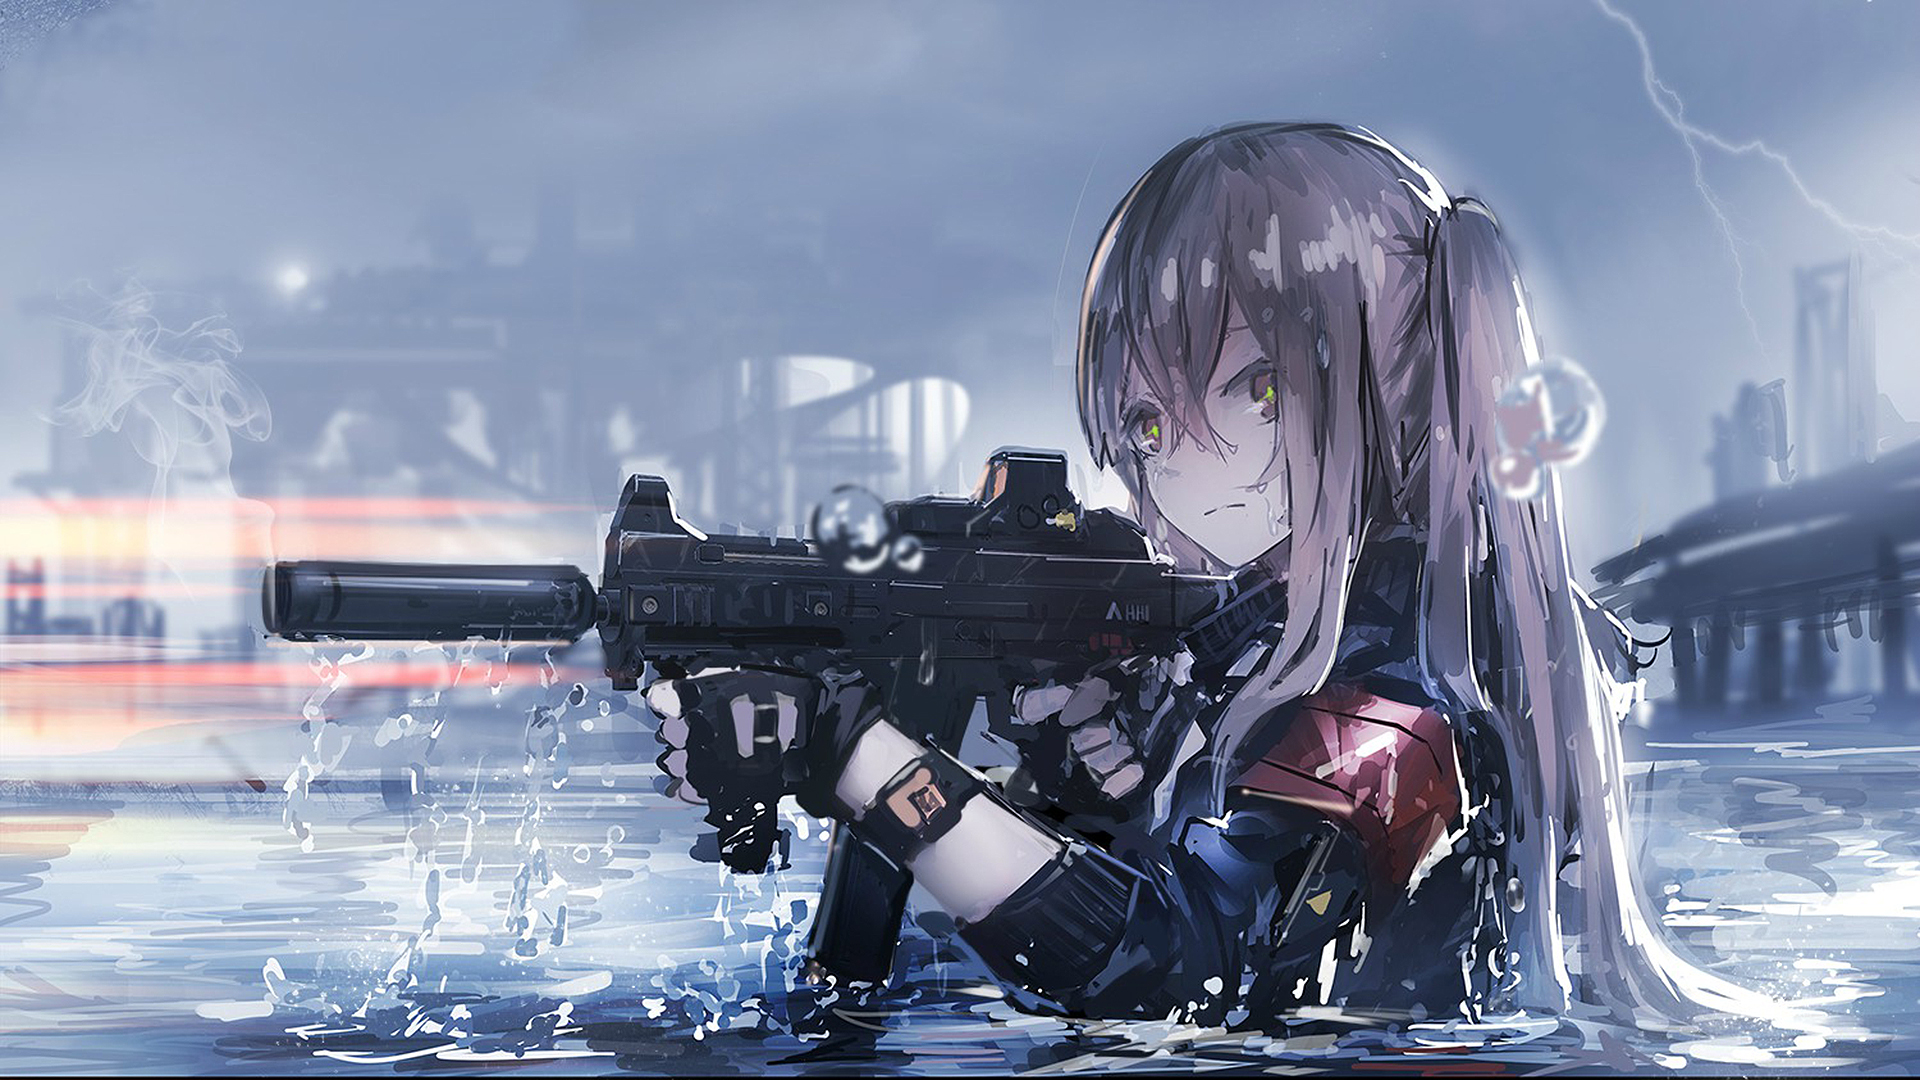 Wallpapers By Renatusâ - Anime Girl With Gun - HD Wallpaper 